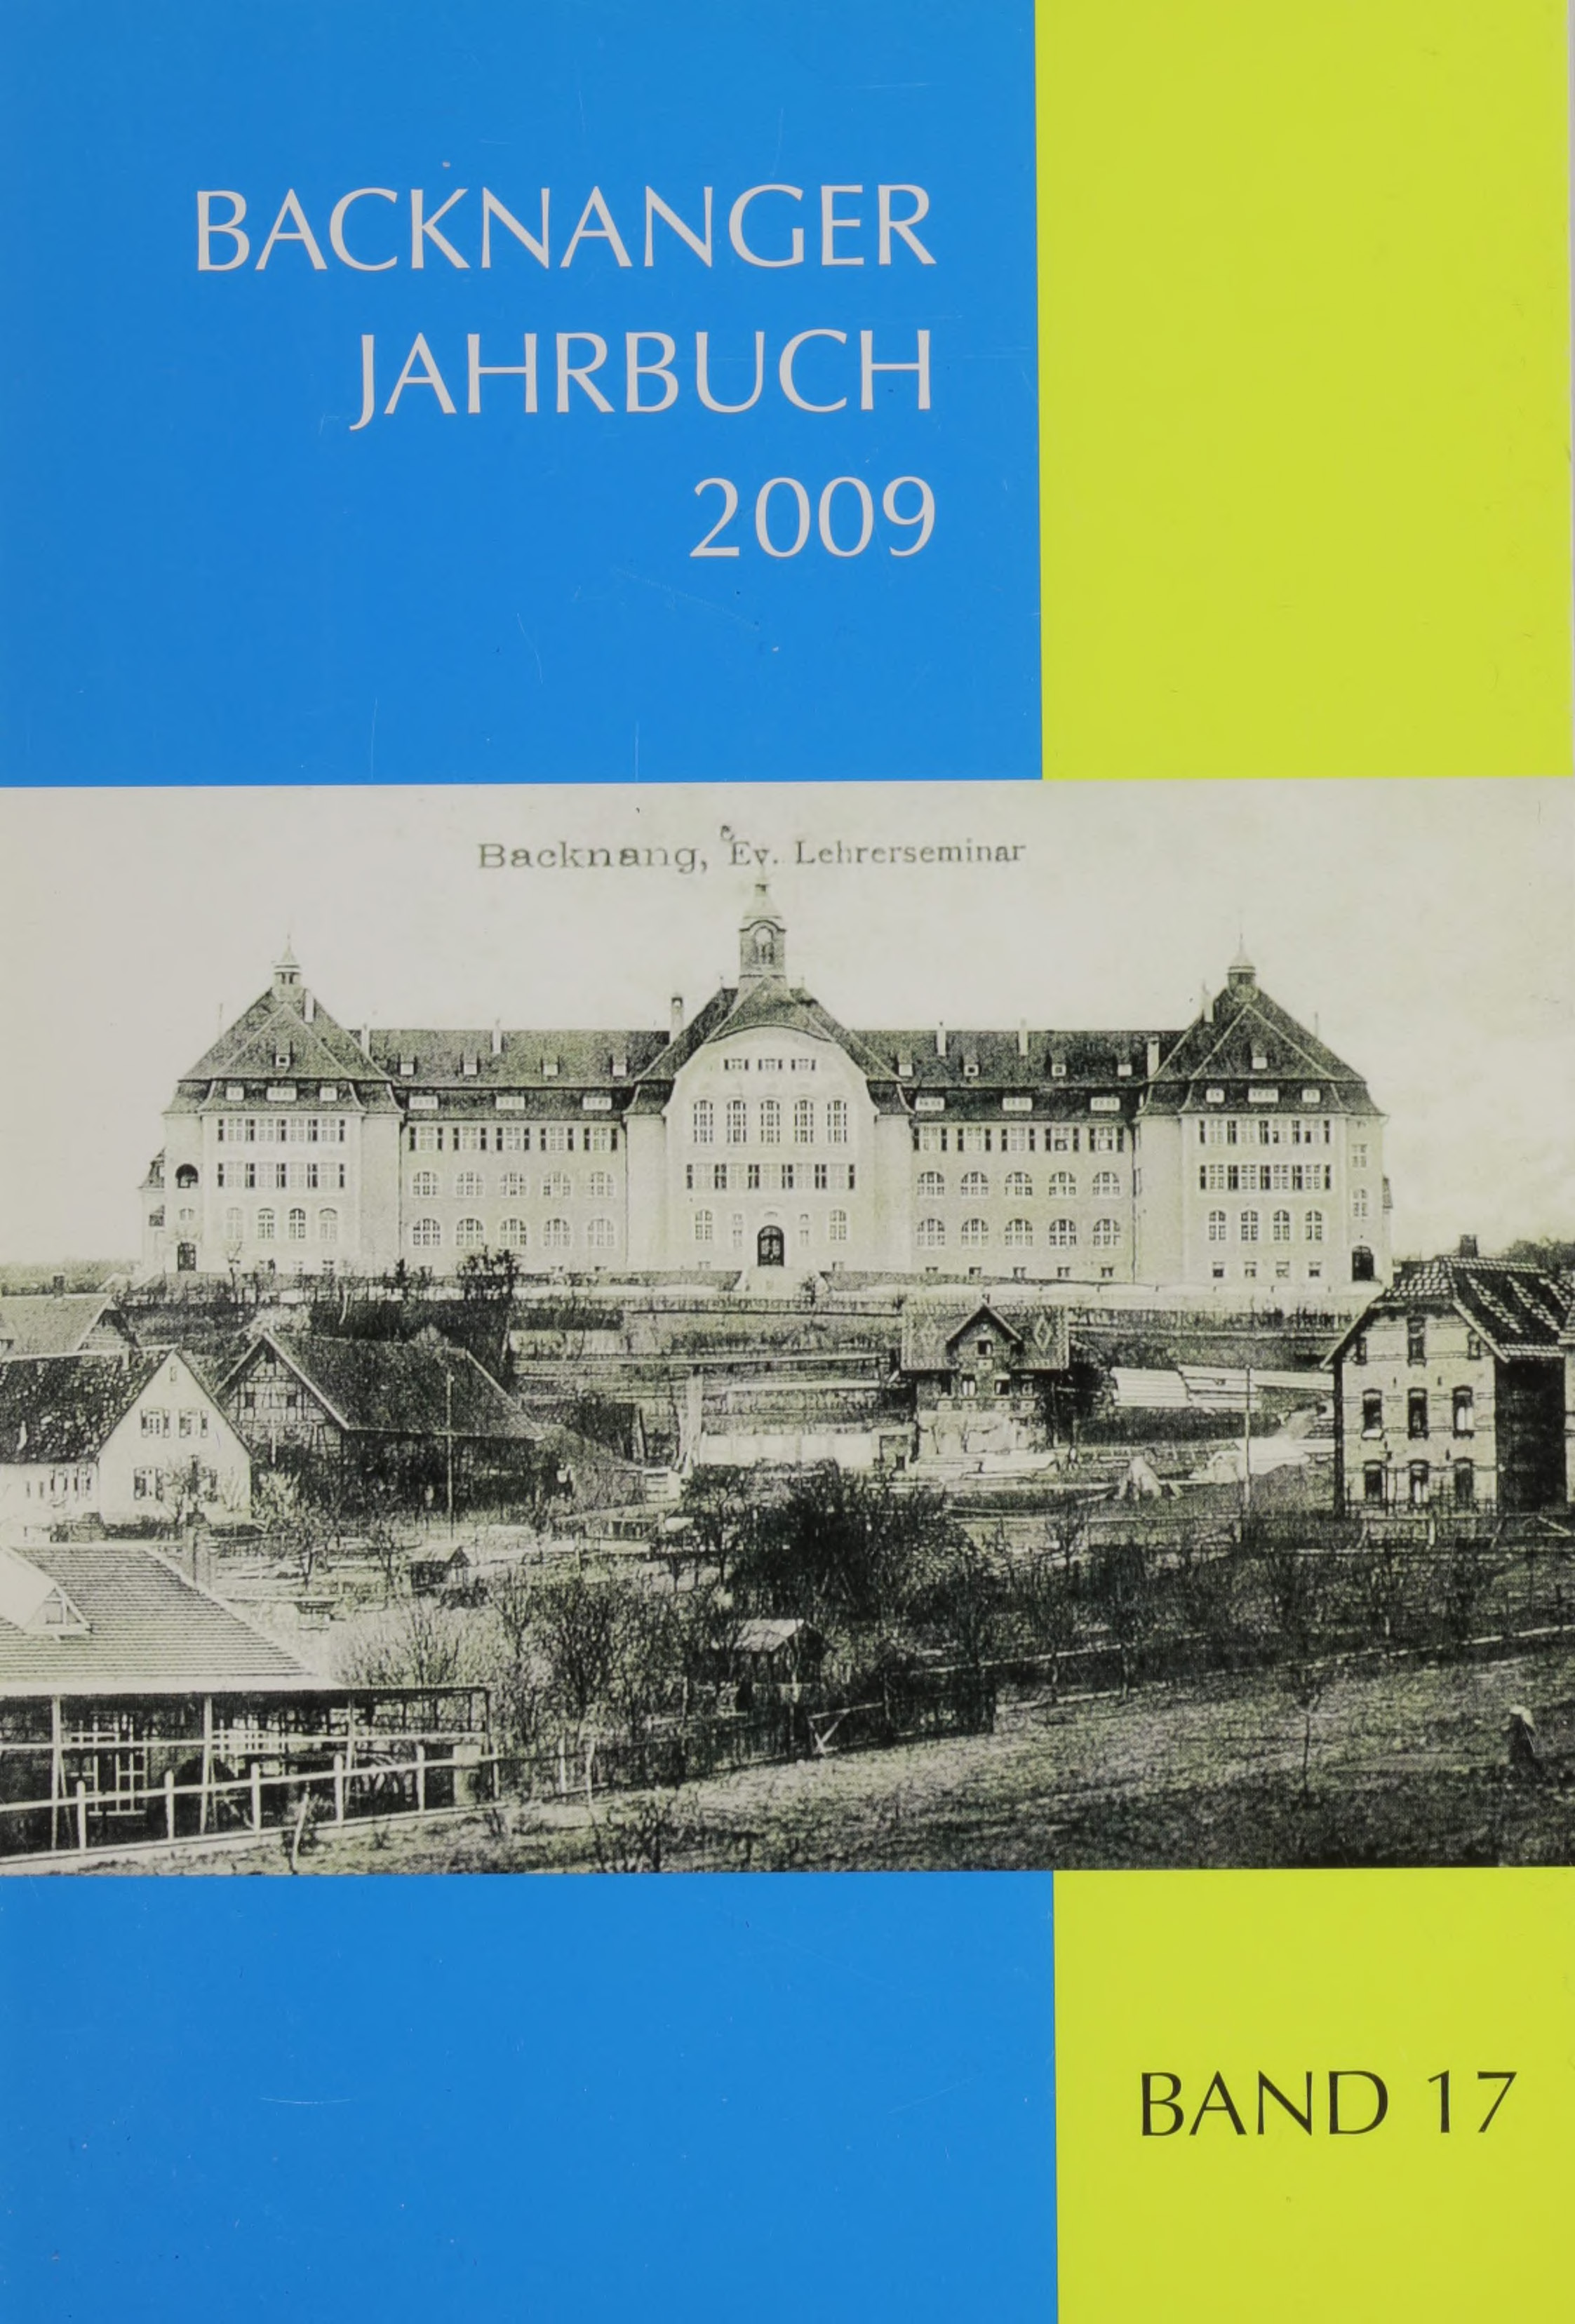                     Ansehen Bd. 17 (2009): Backnanger Jahrbuch
                